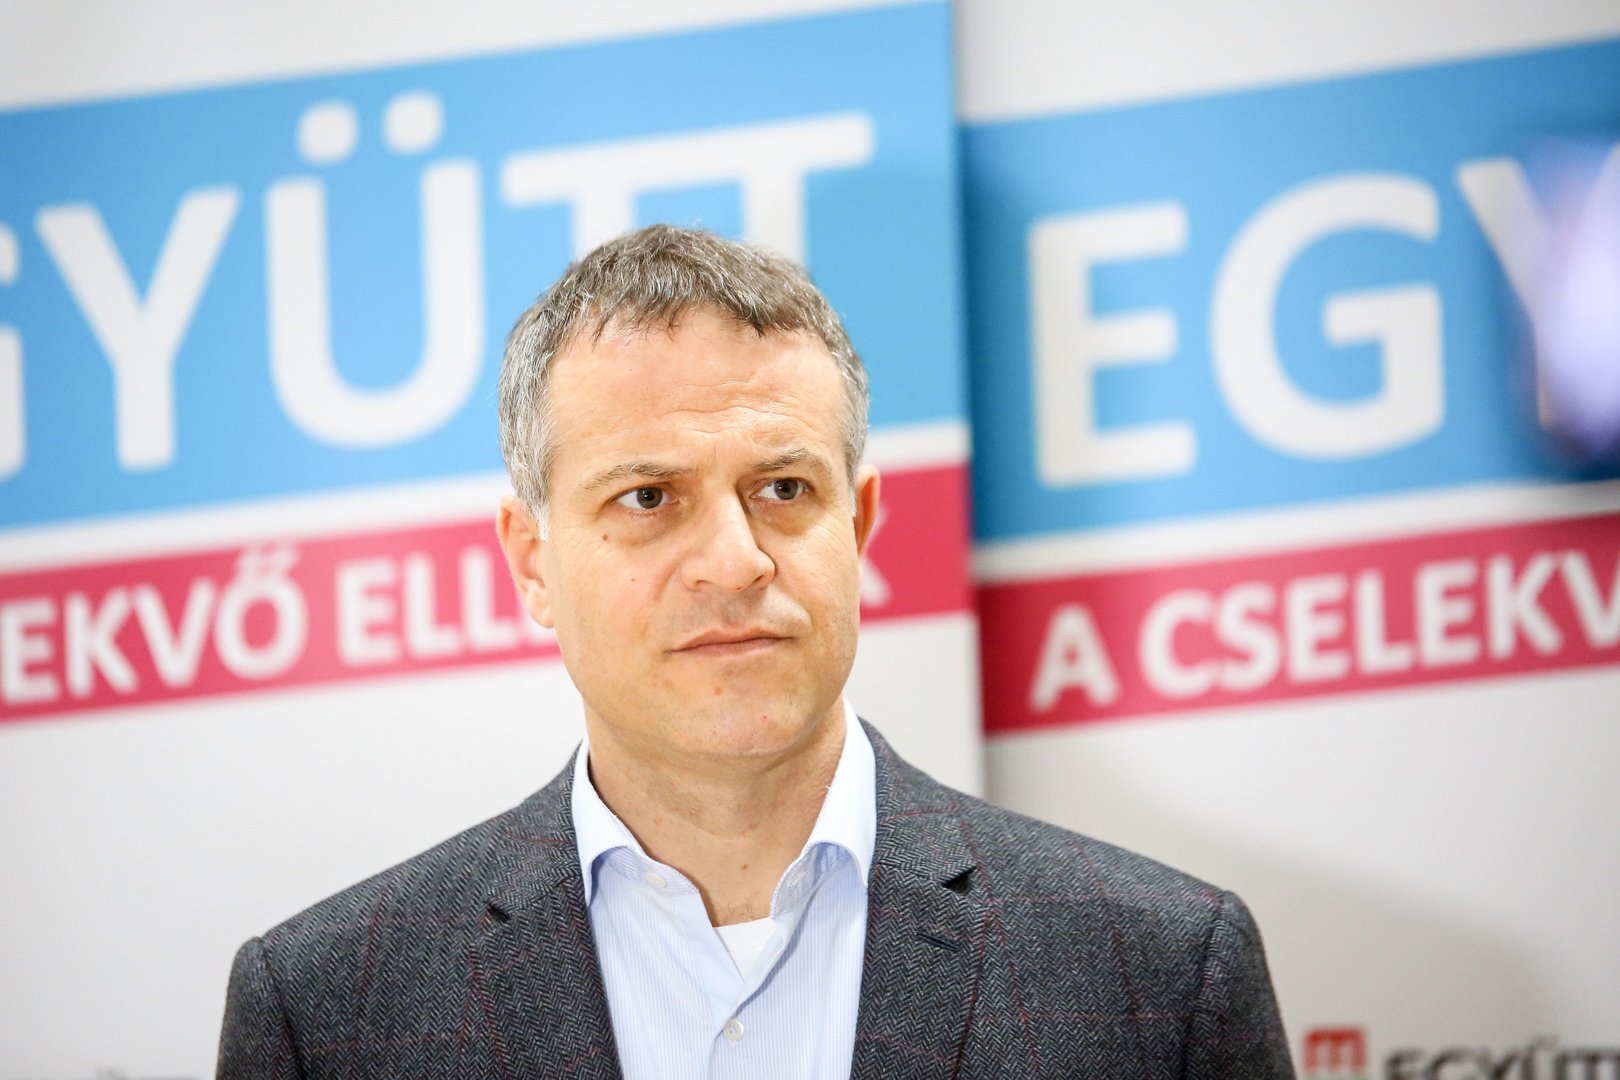 Péter Juhász, an opposition politician, harbors hope that Péter Magyar will break his silence